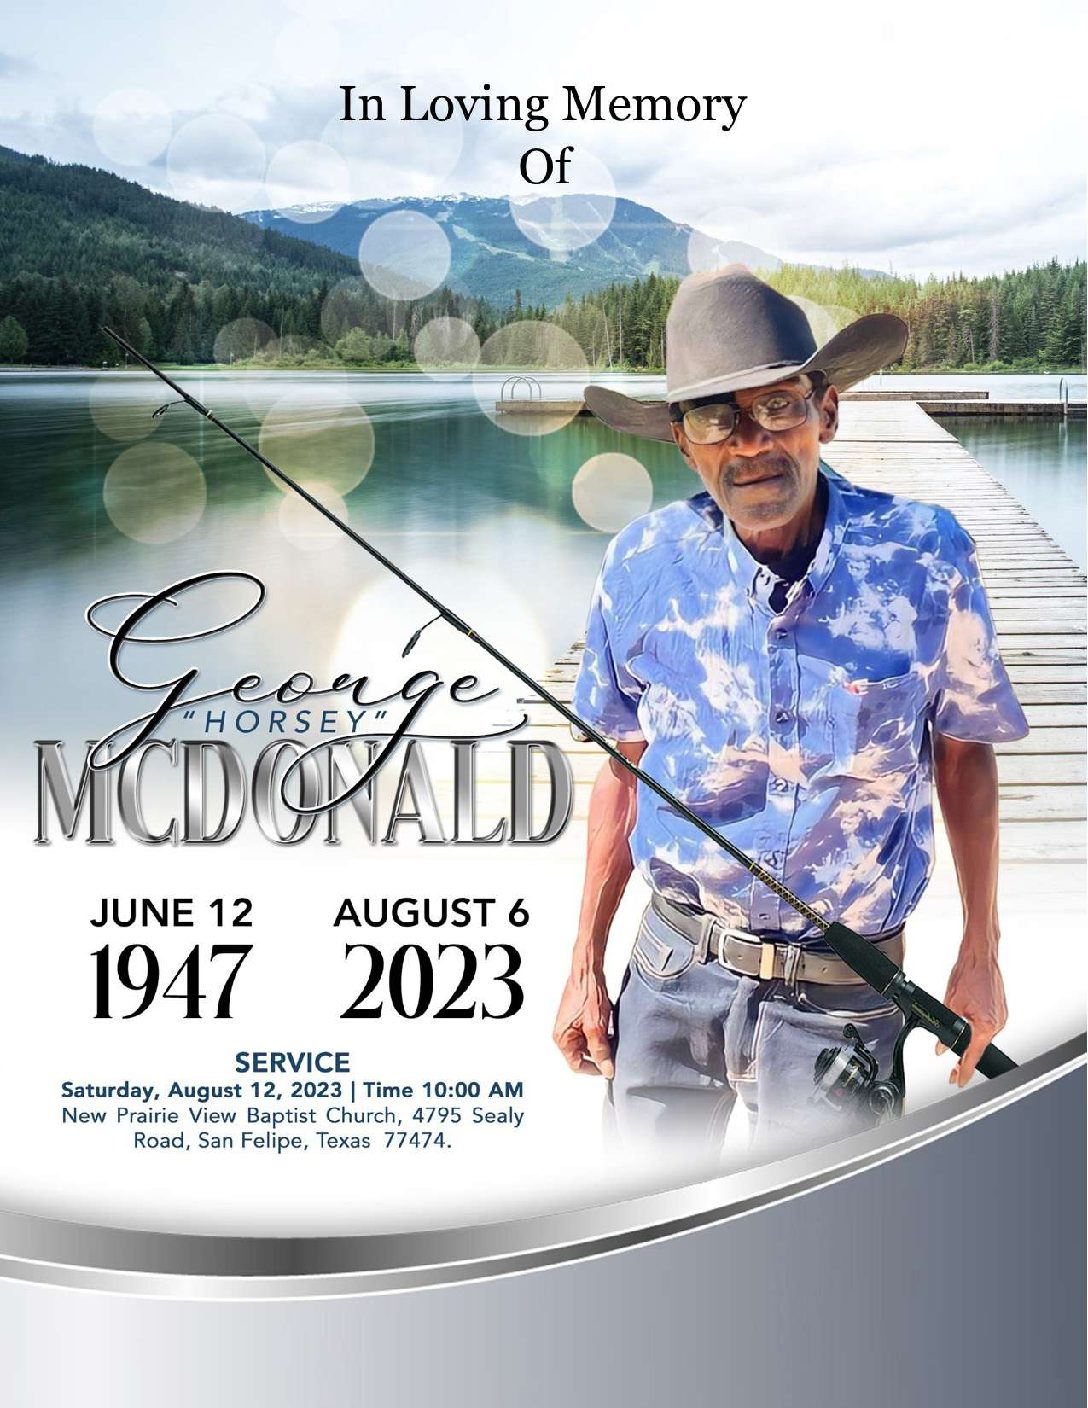 George “Horsey” McDonald 1947 – 2023